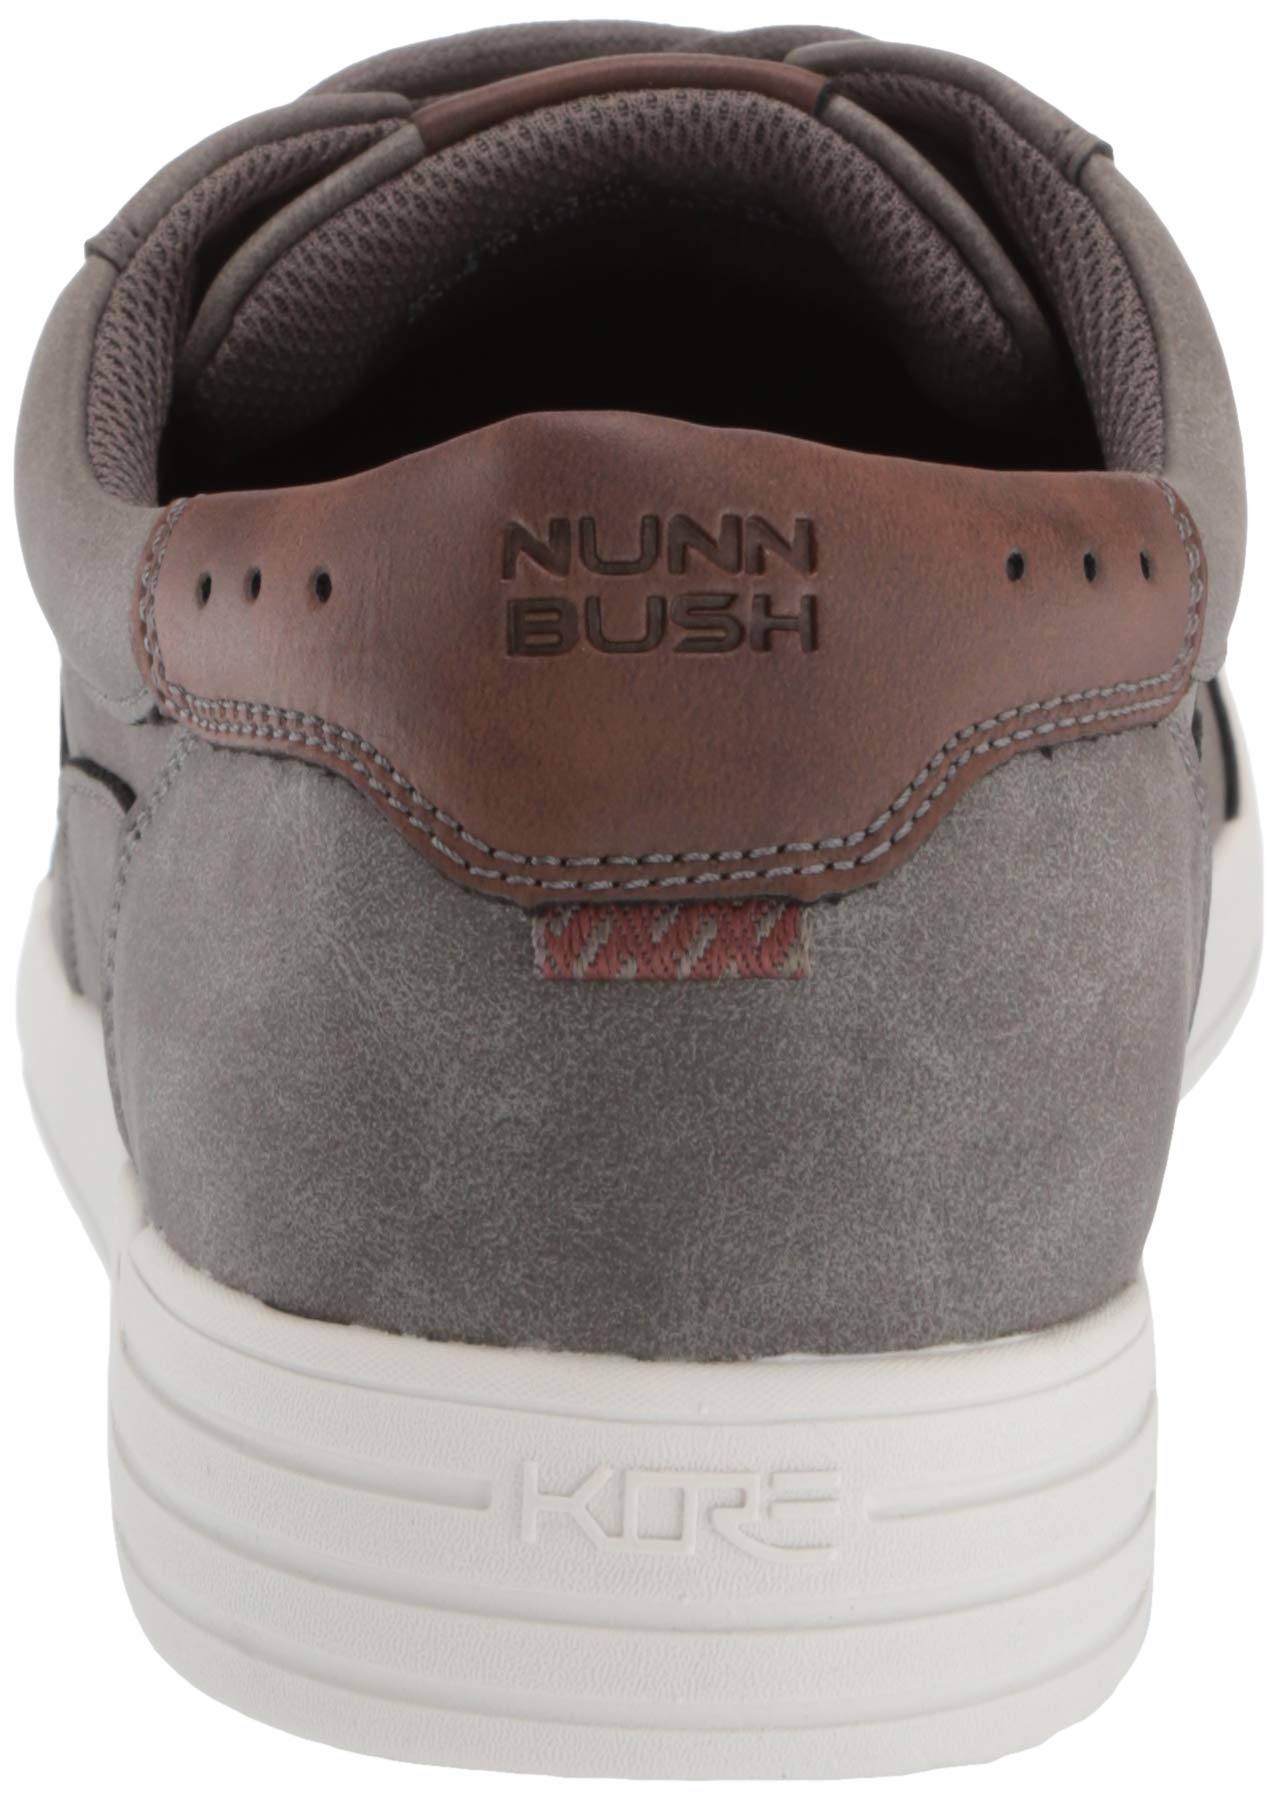 Nunn Bush Men's Kore City Walk Oxford Athletic Style Sneaker Lace Up Shoe